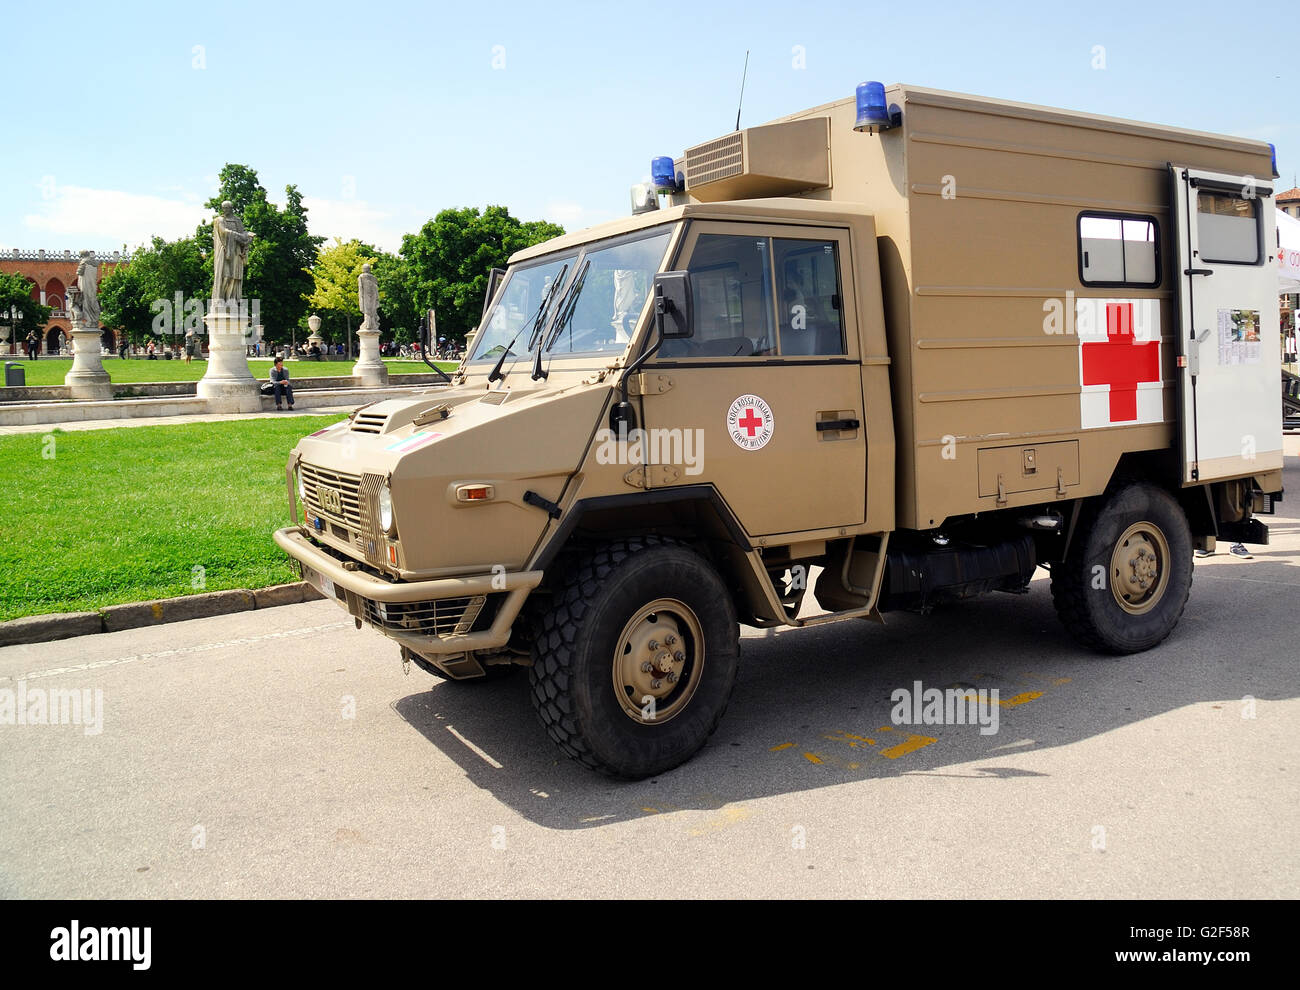 Padova, Italy. An Iveco Daily Vm 4x4 Military Red Cross ambulance in Prato della Valle. Stock Photo